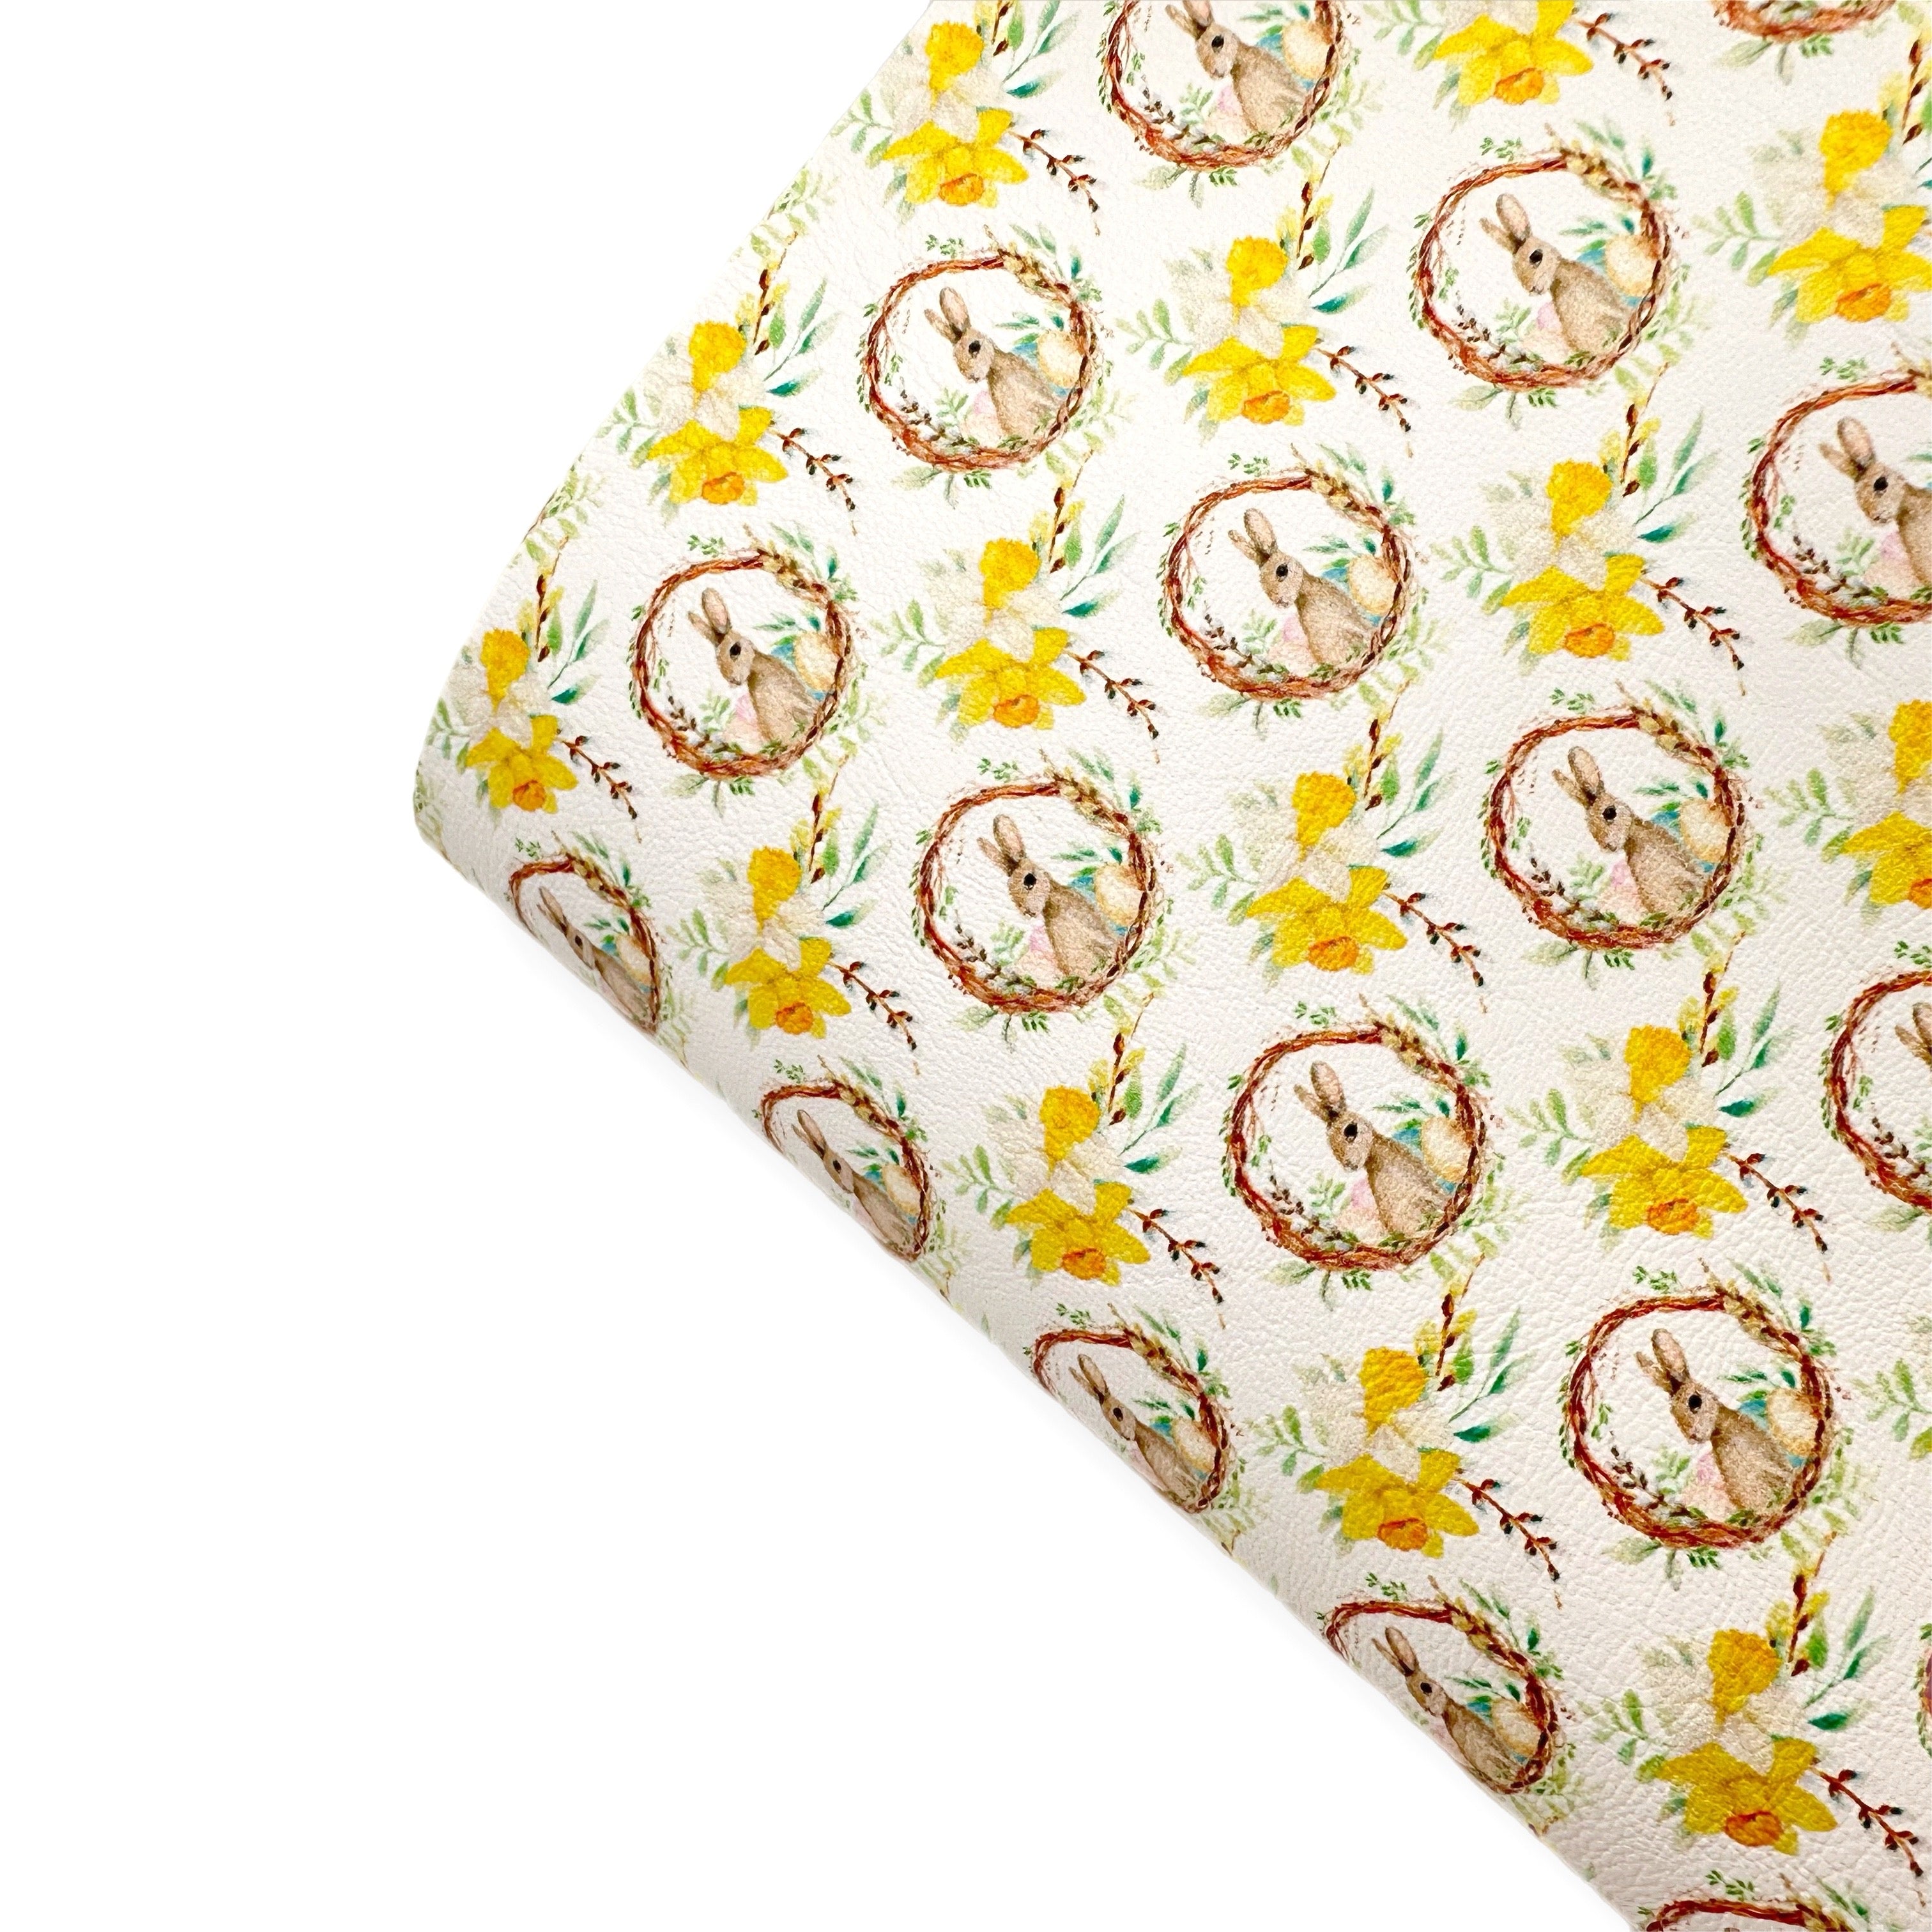 Daffodil Bunny Premium Faux Leather Fabric